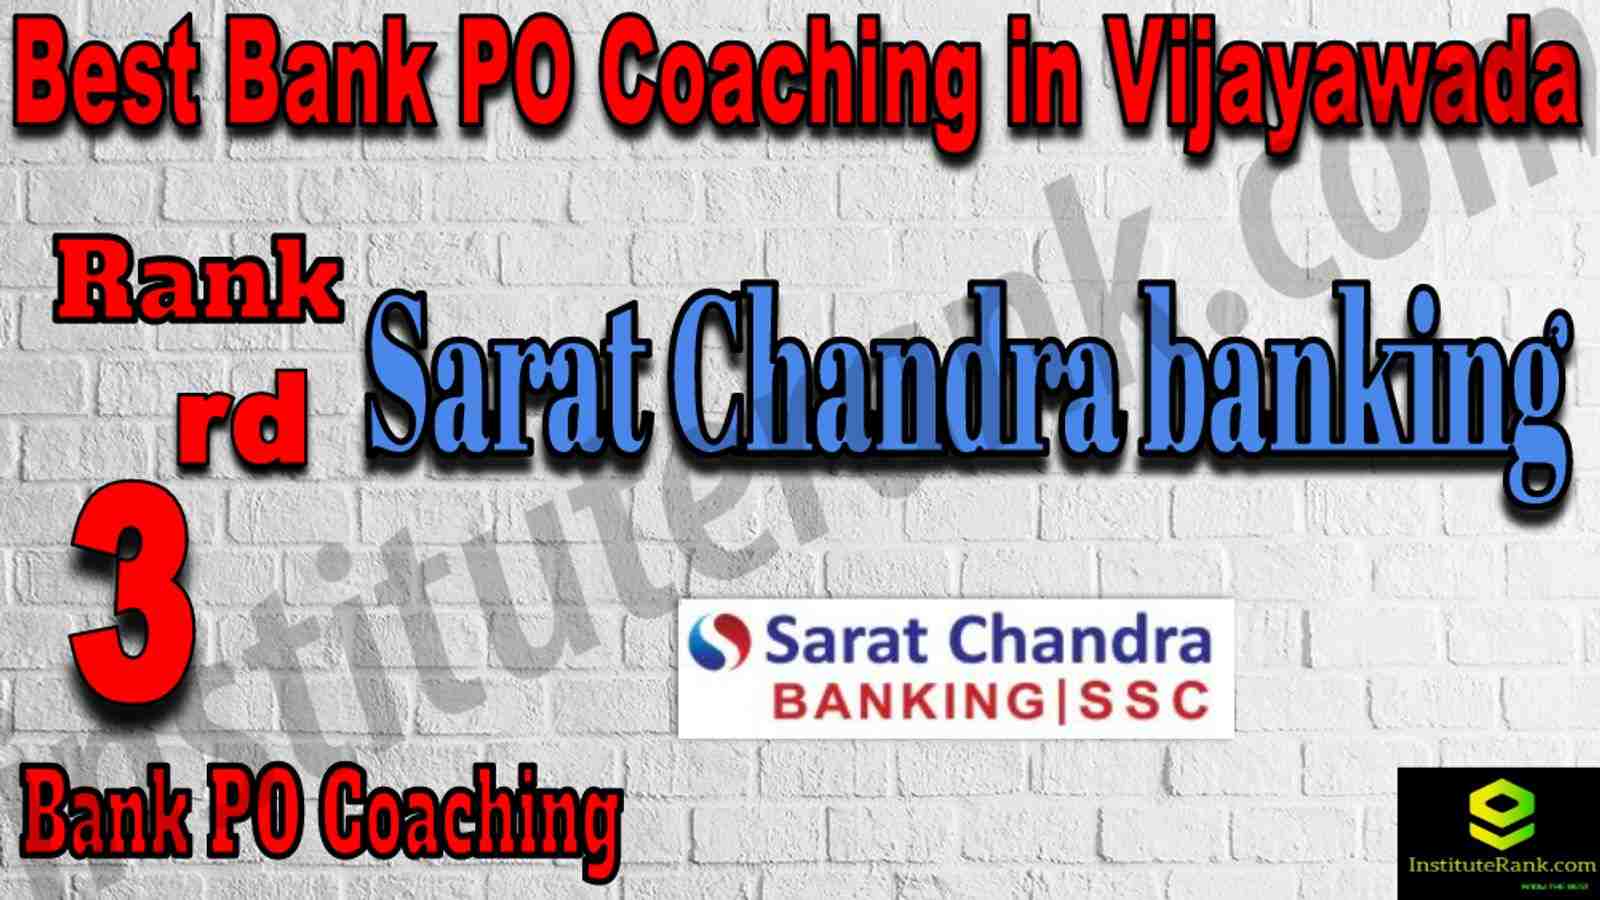 3rd Best Bank PO Coaching in Vijayawada